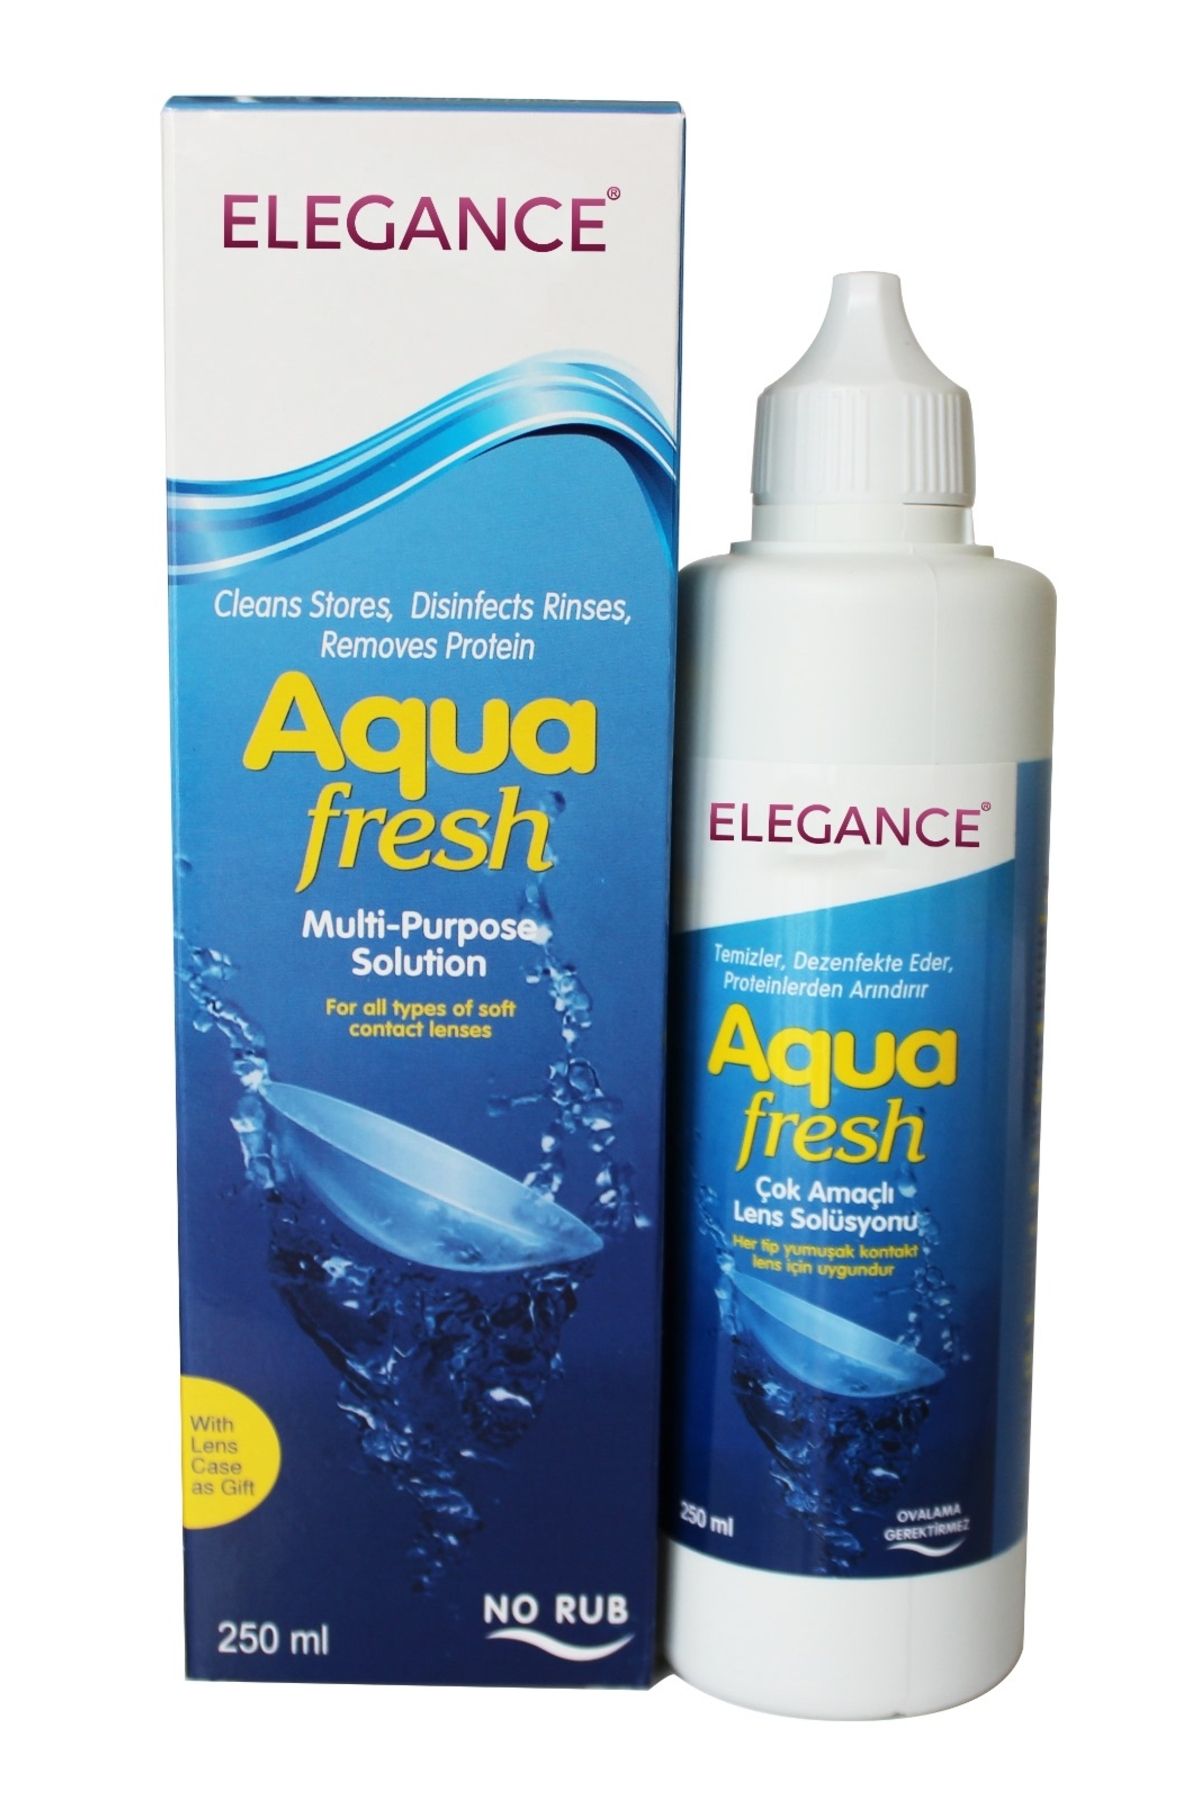 Aquafresh ELEGANCE AQUA FRESH LENS SOLÜSYONU 250 ML SKT:03/2026